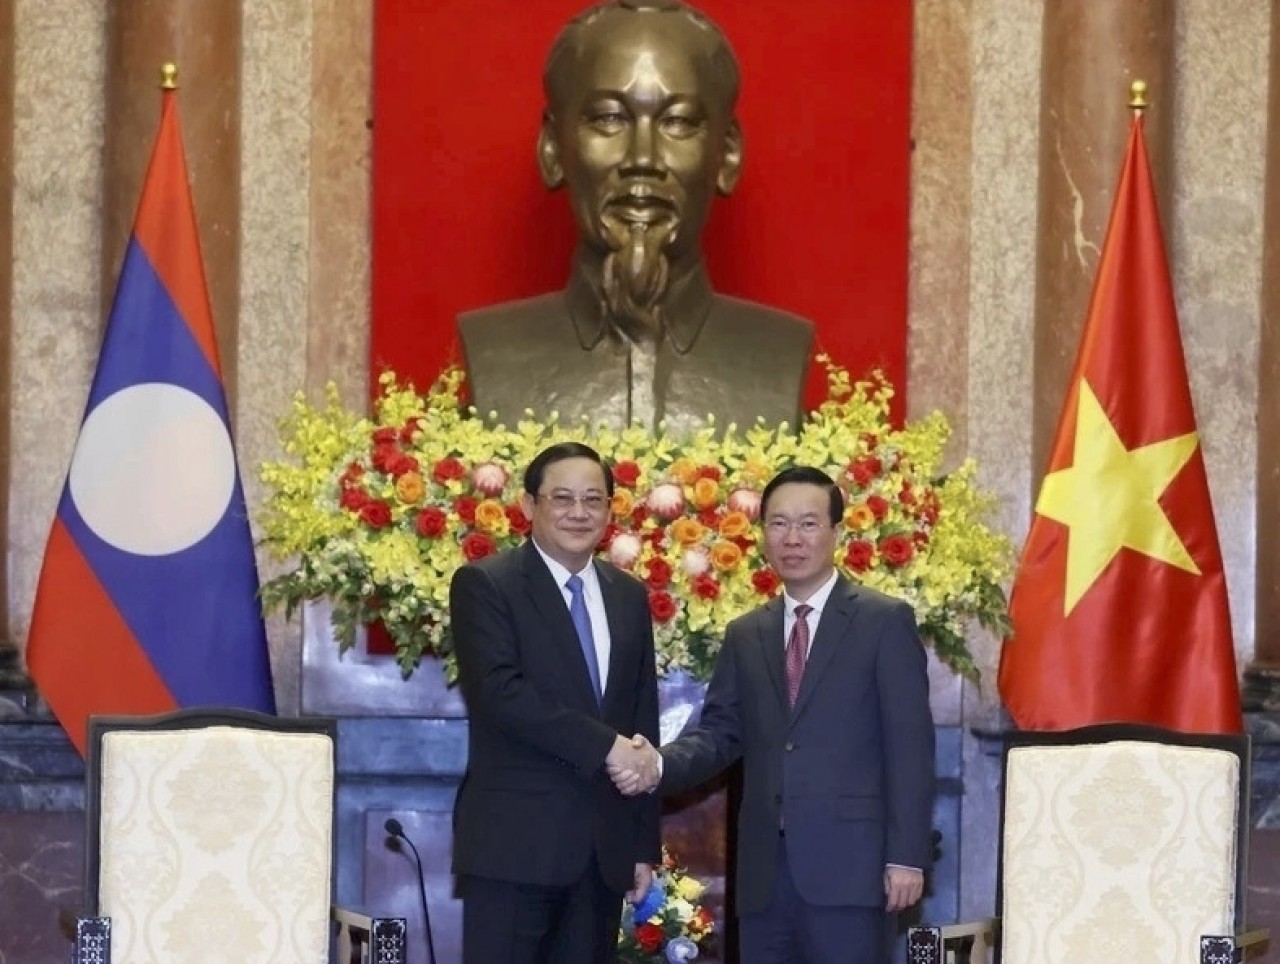 Vietnam News Today (Jan. 7): Vietnam Supports Laos in Fulfilling International Responsibilities